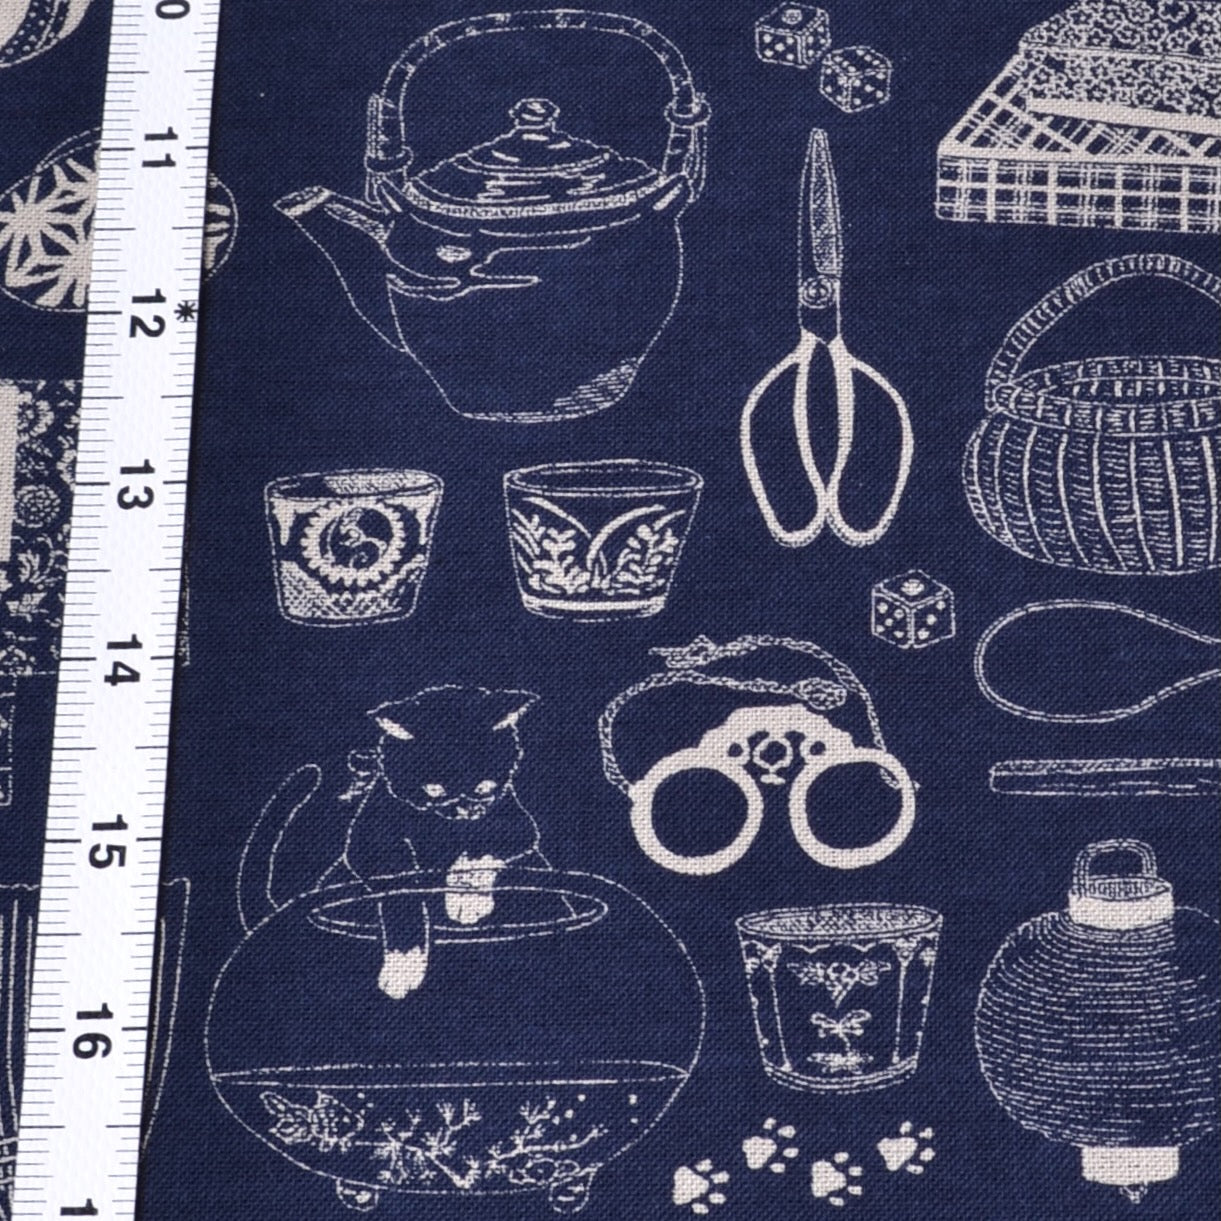  Japanese wagara cotton print fabric